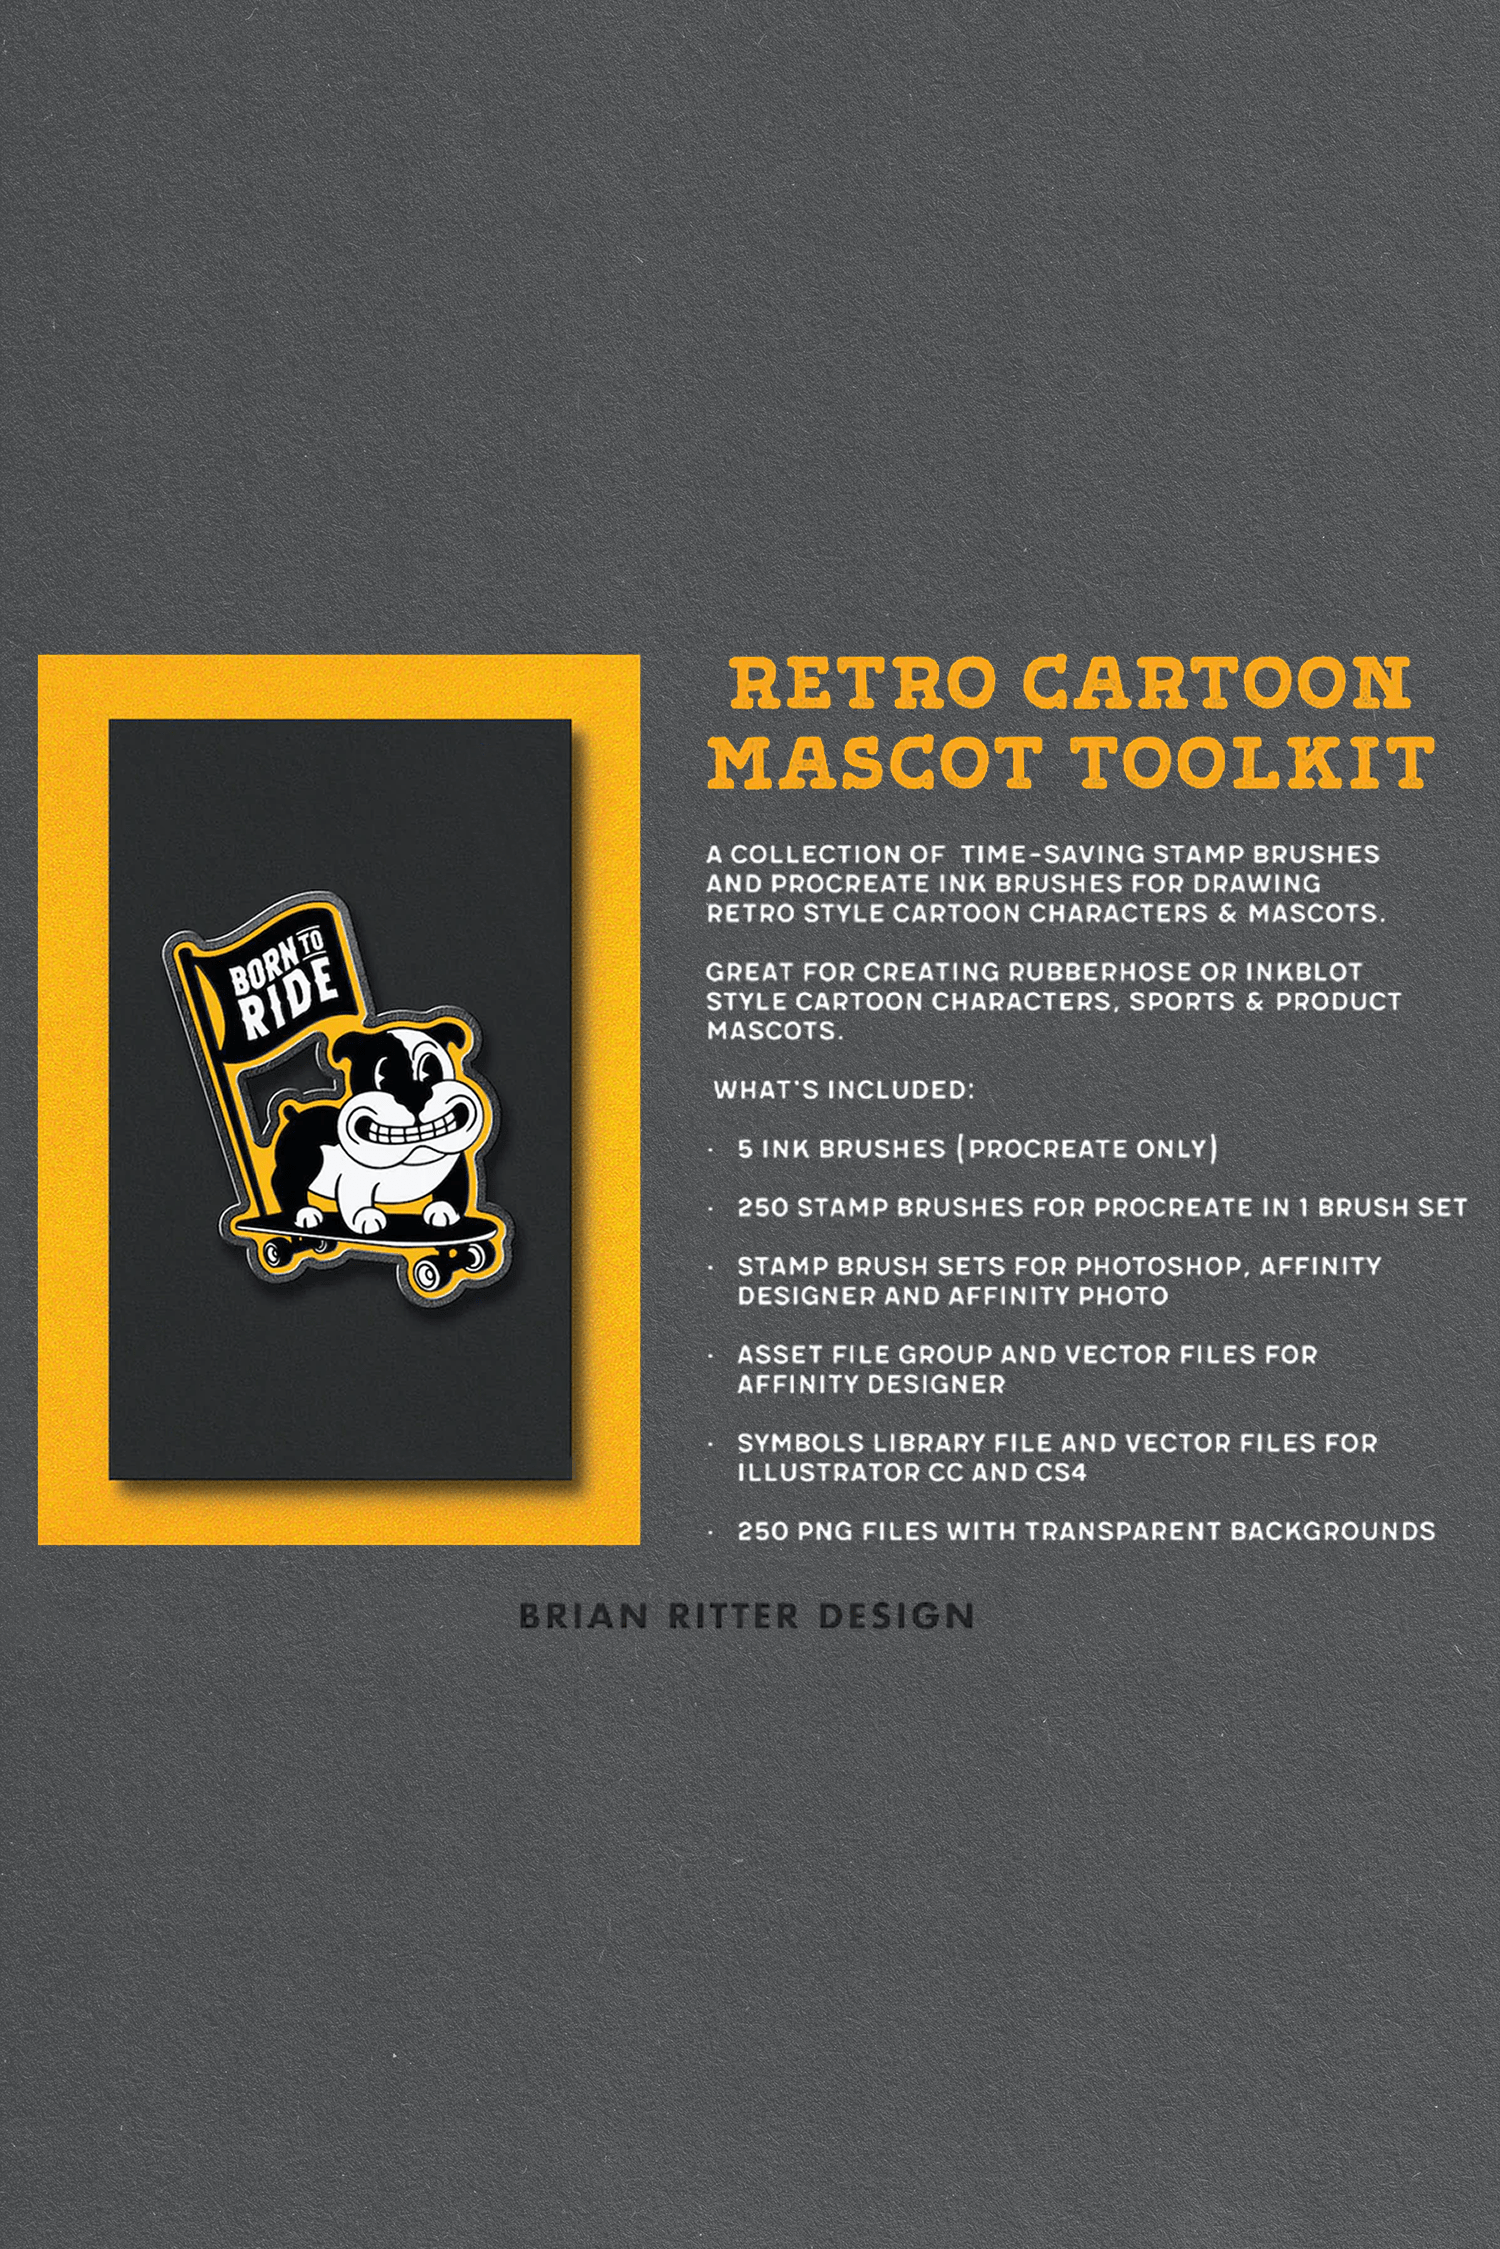 Retro Cartoon Mascot Toolkit by Brian Ritter Design